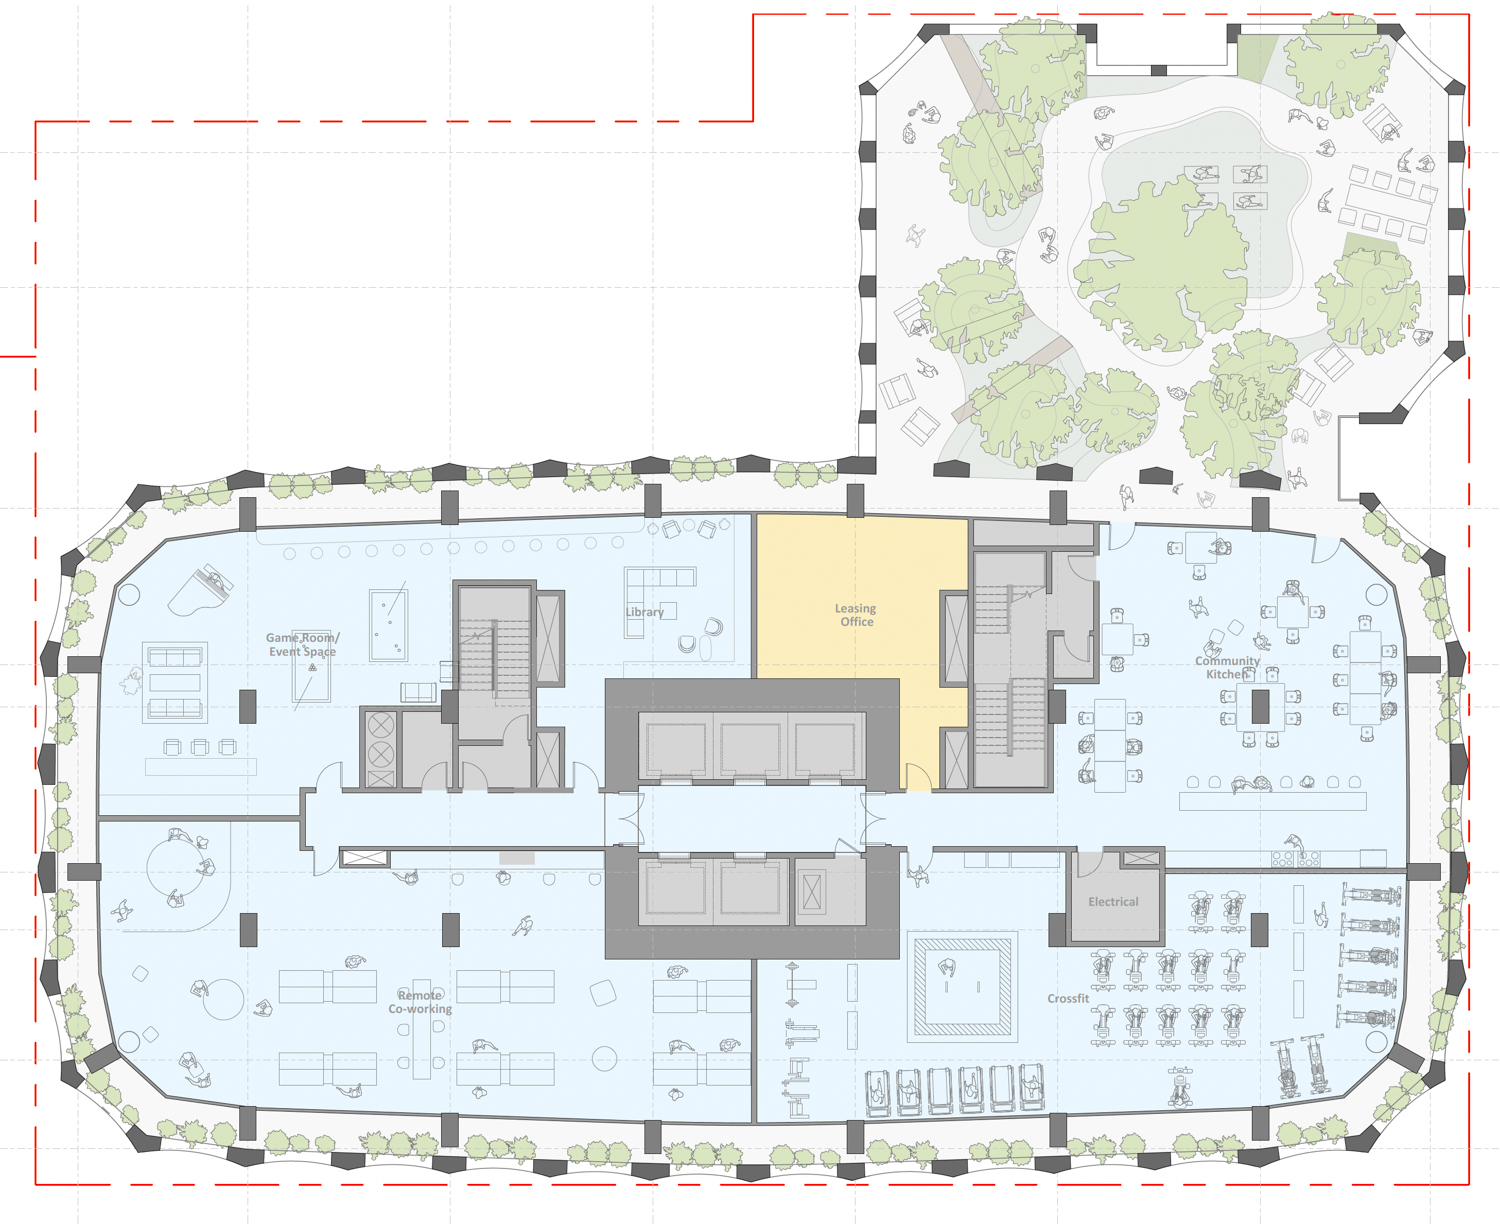 395 3rd Street 11th level floor plan, rendering by Henning Larsen